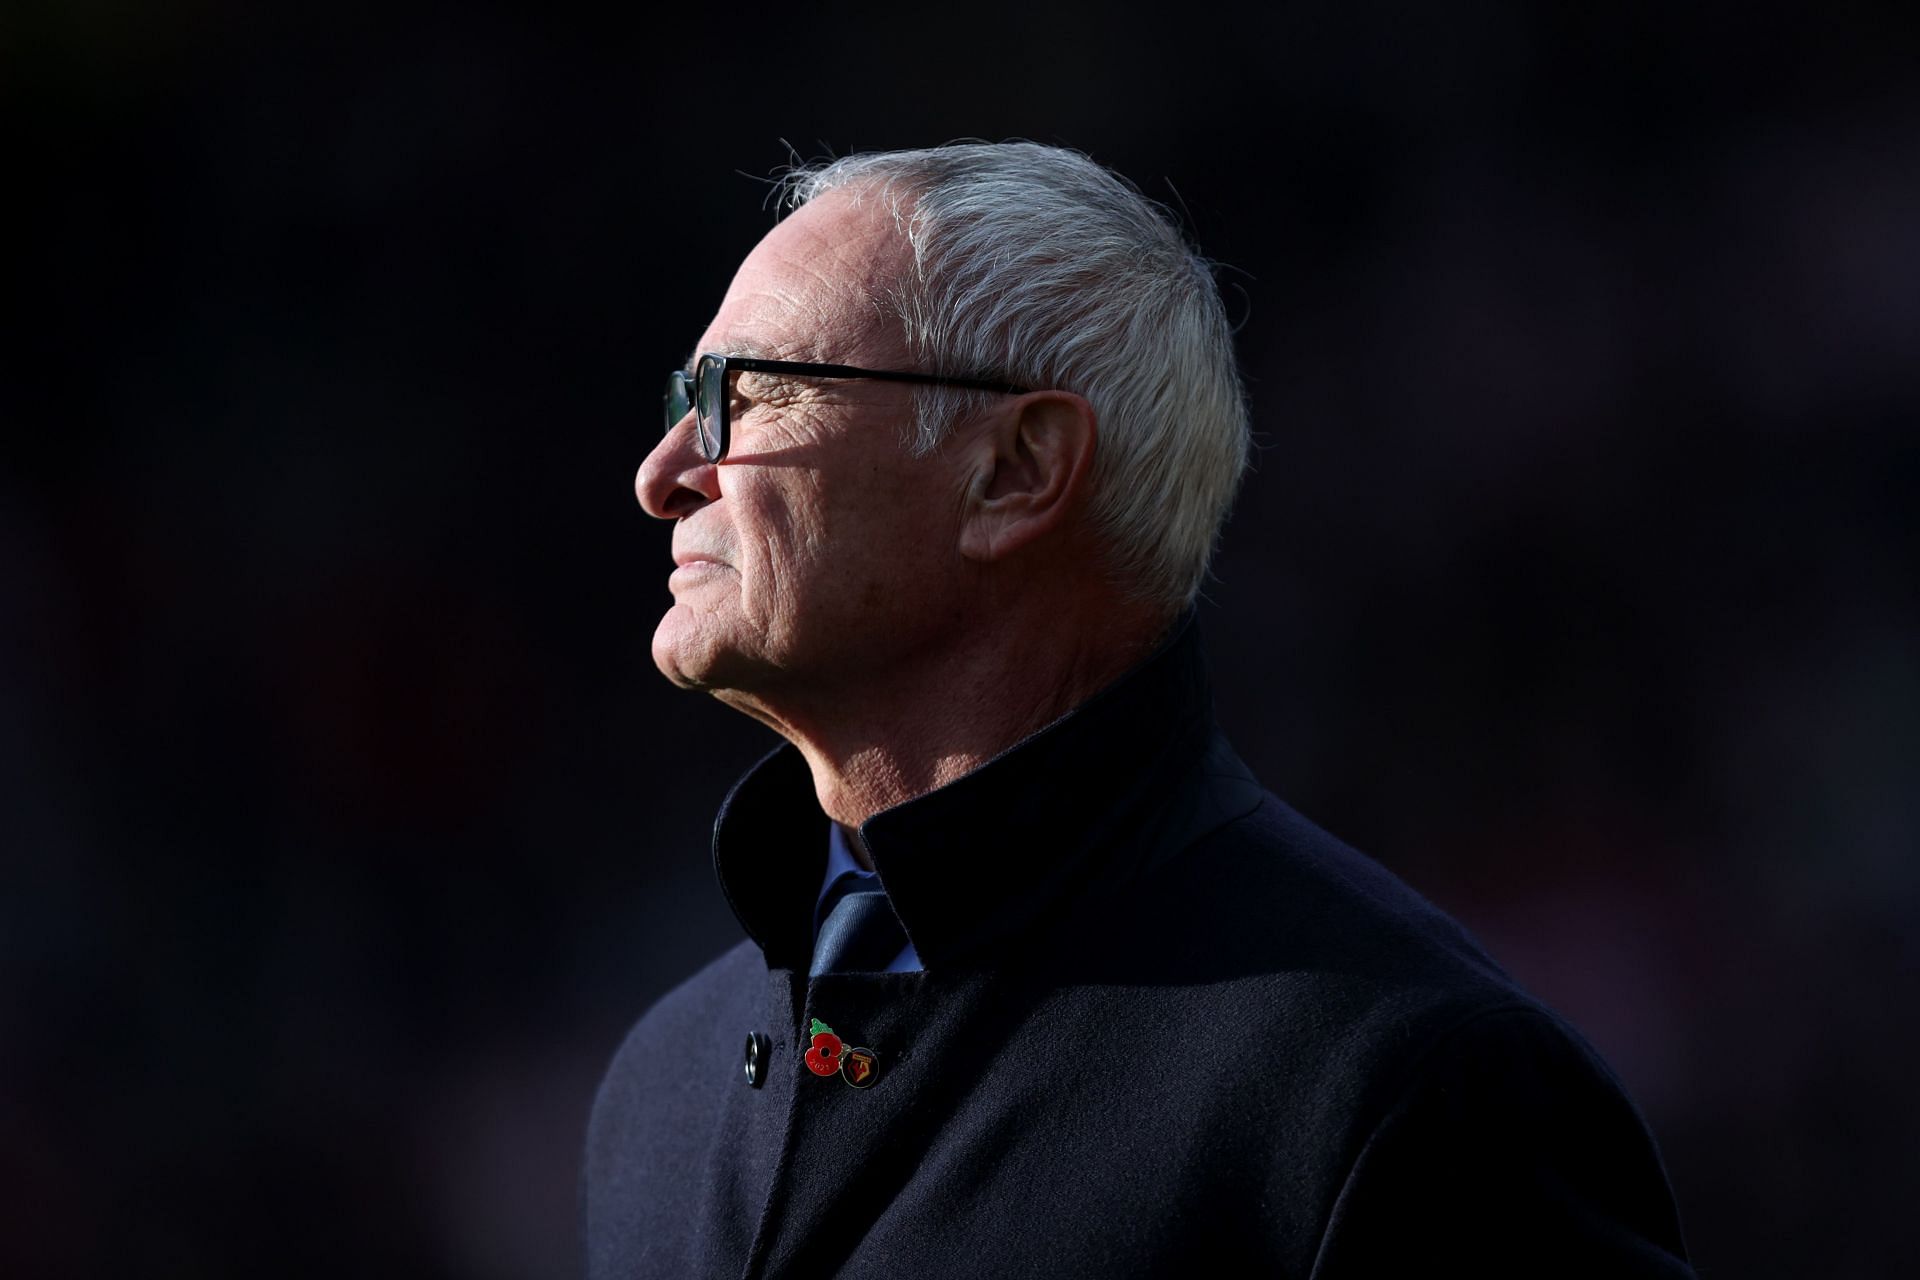 Watford manager Claudio Ranieri